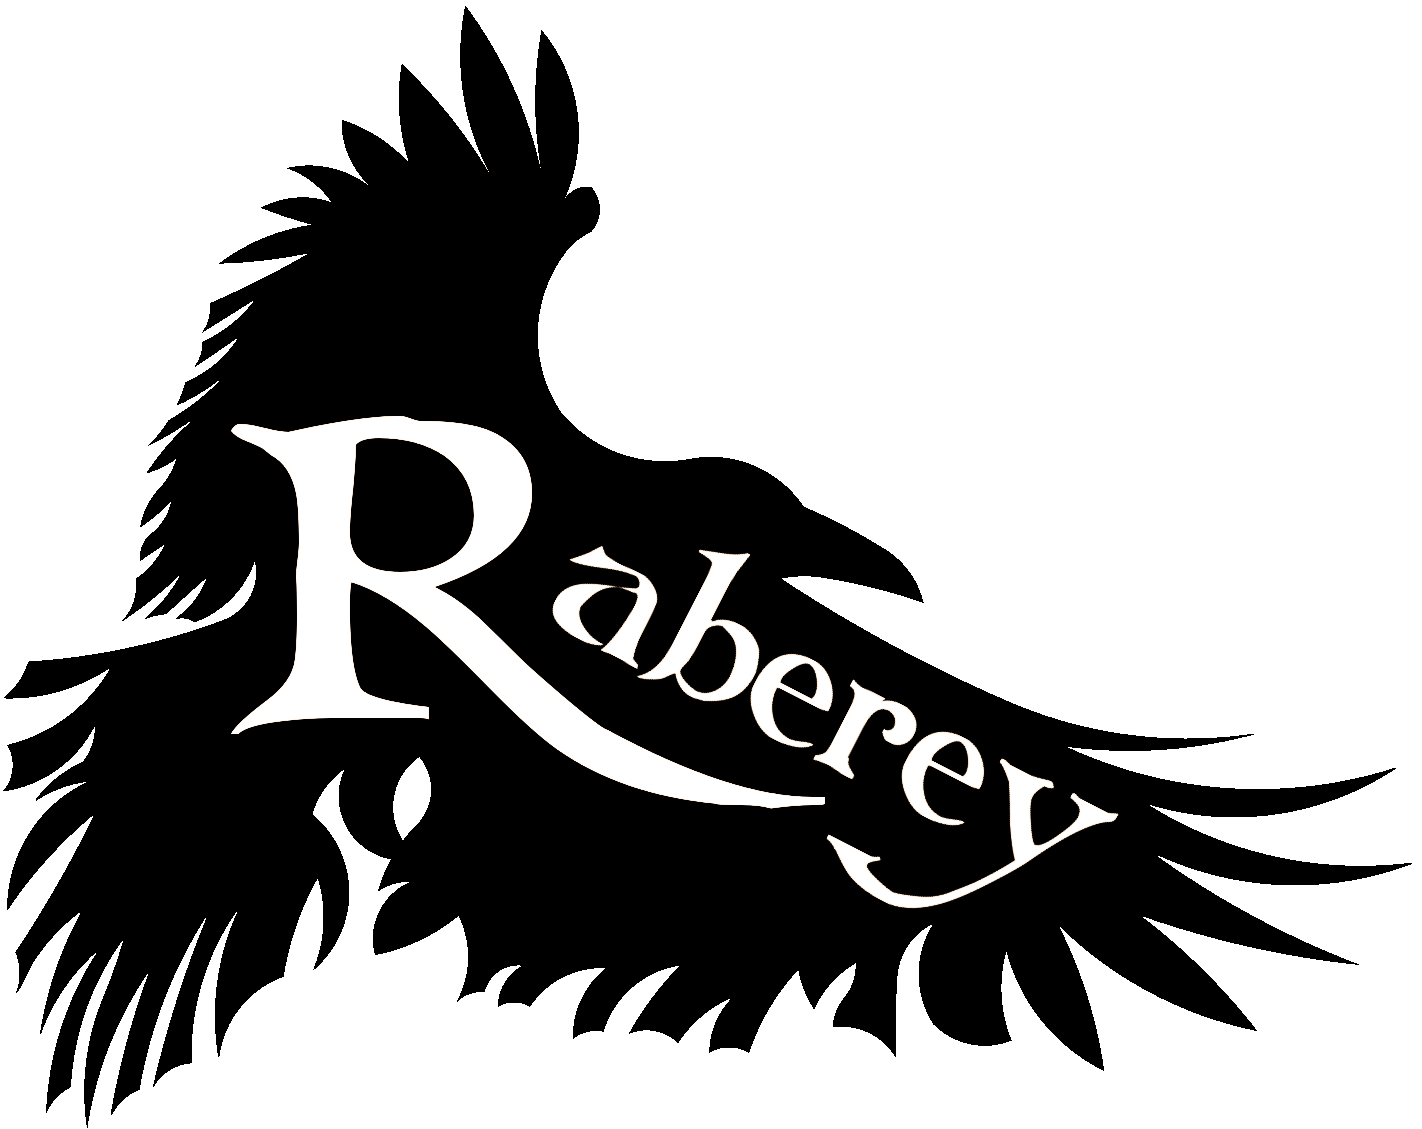 Raberey